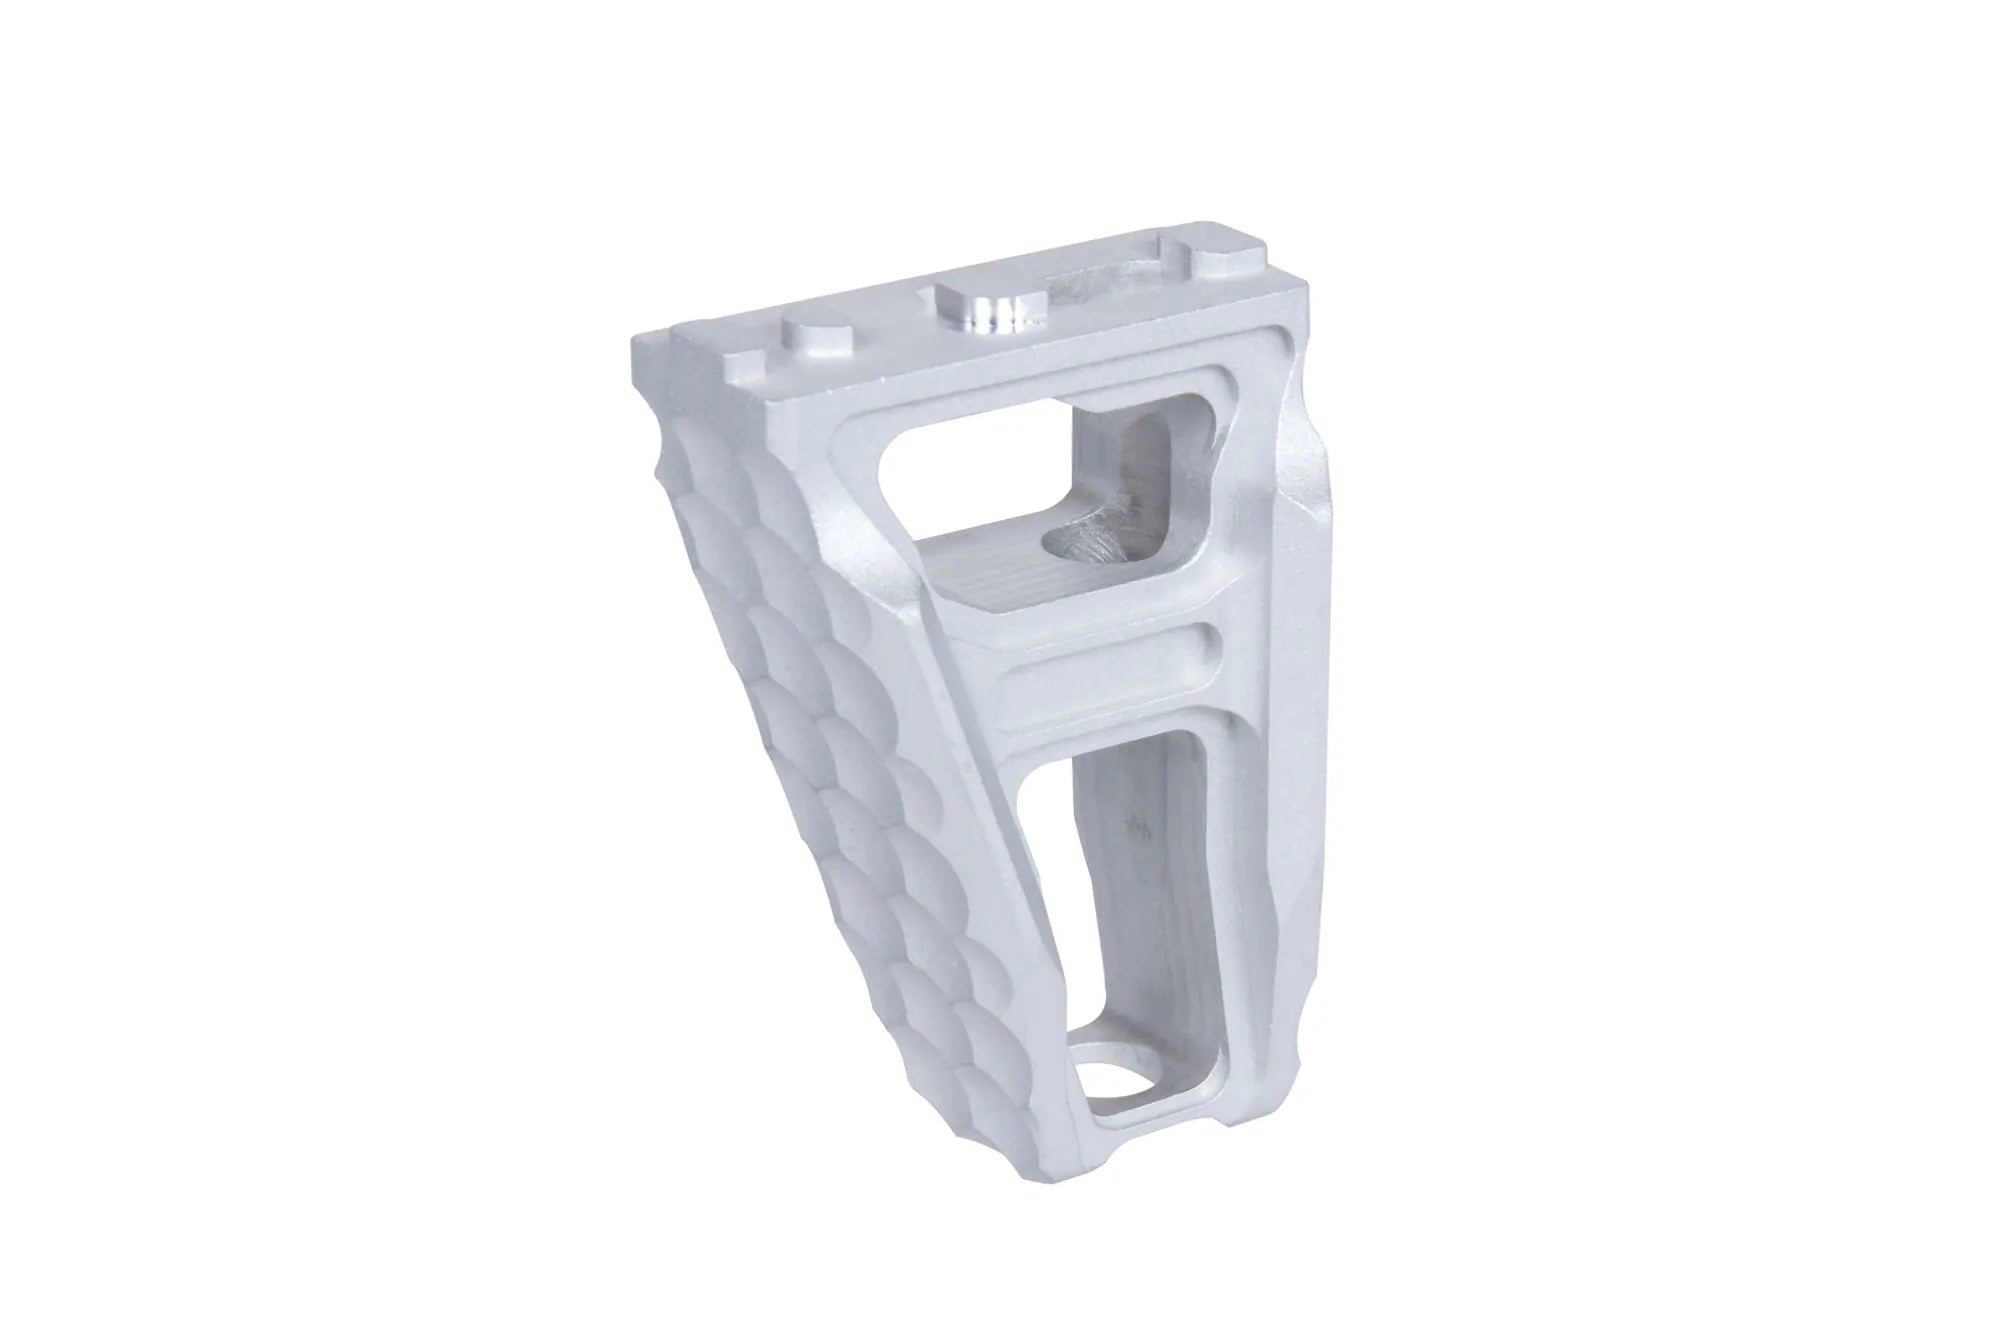 RSAC Lightweight front grip for KeyMod/M-LOK Silver-2